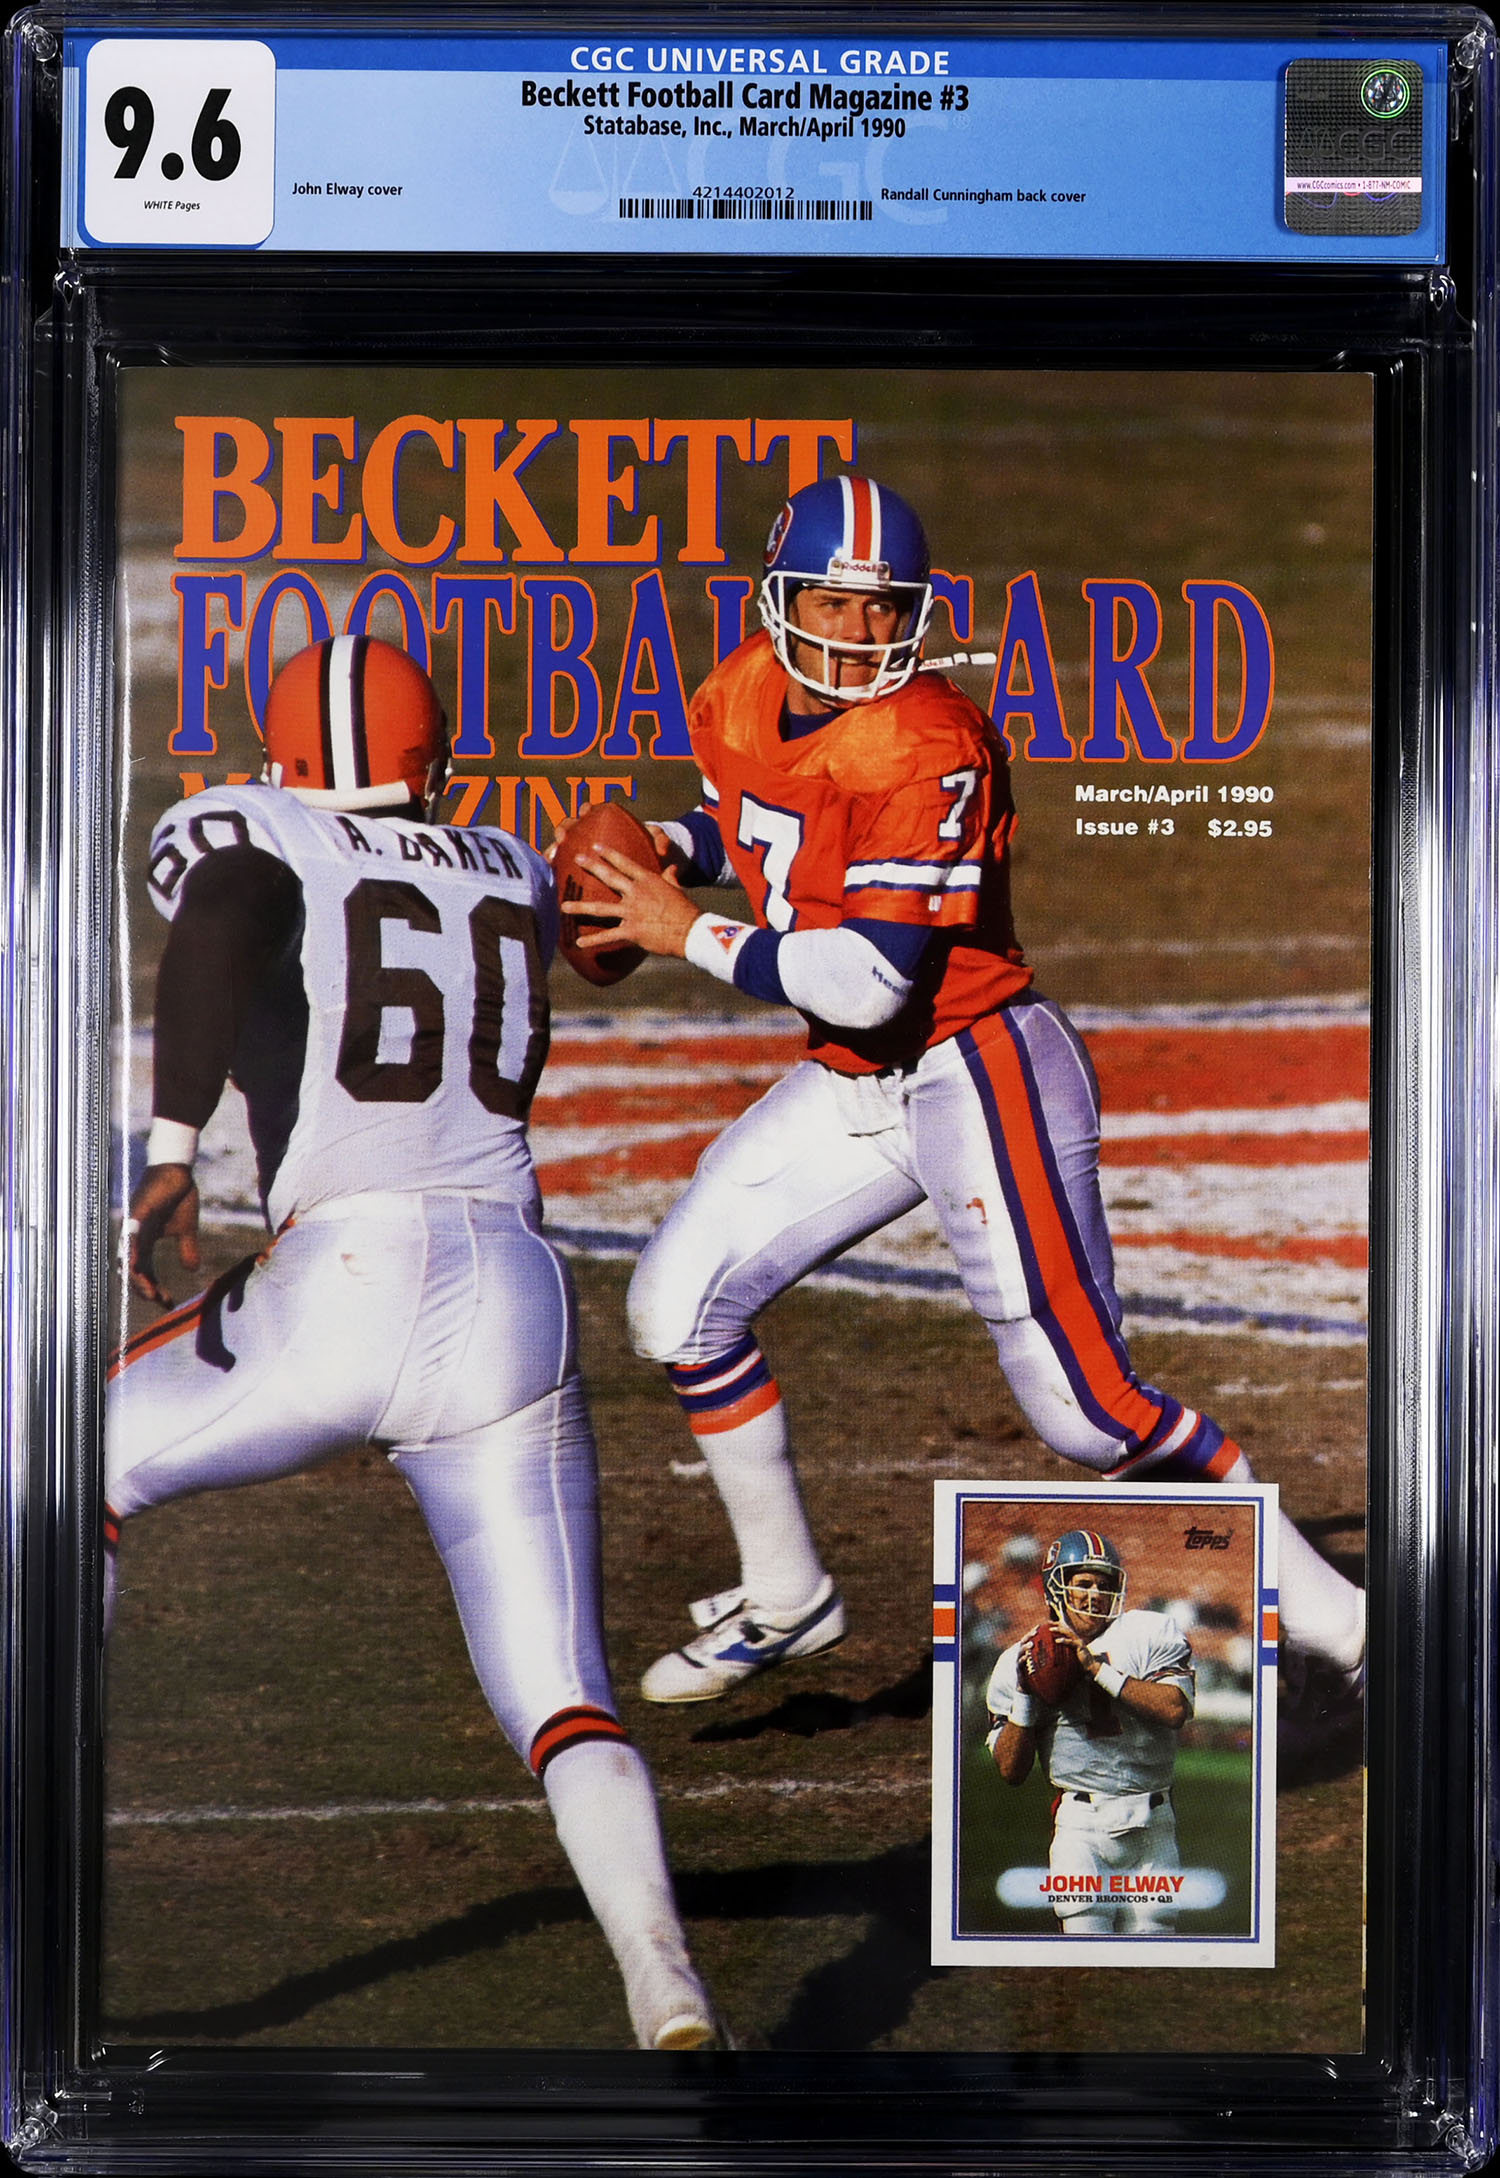 Beckett Football Card Magazine #3 (3-4/90) John Elway Cover - MINT State -  PSA Graded Vintage Baseball, Football, and Basketball Cards